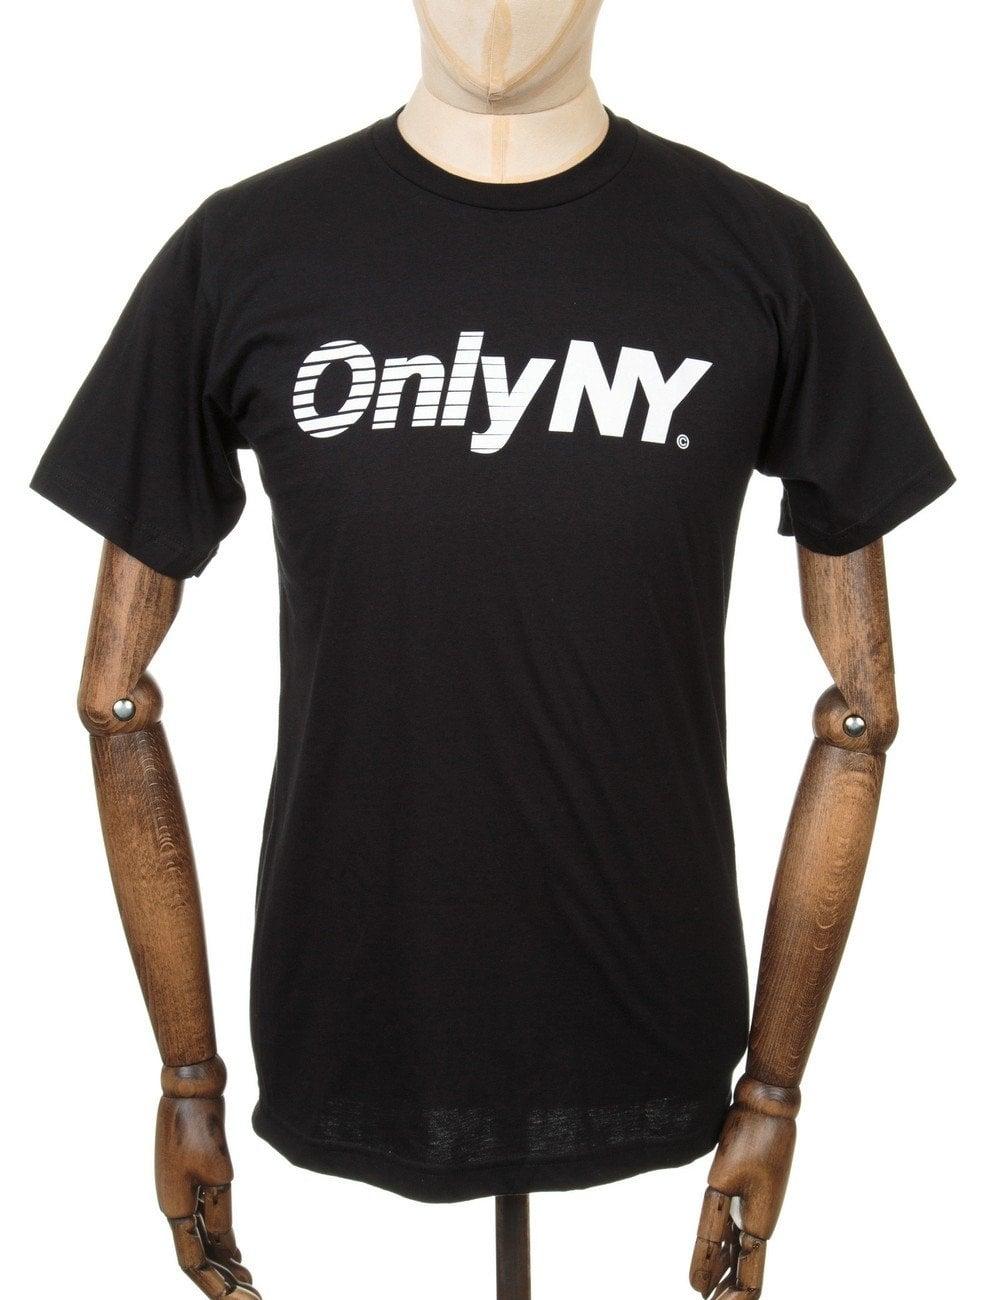 Express Clothing Store Logo - Only NY Clothing Express Logo T-shirt - Black - Clothing from Fat ...